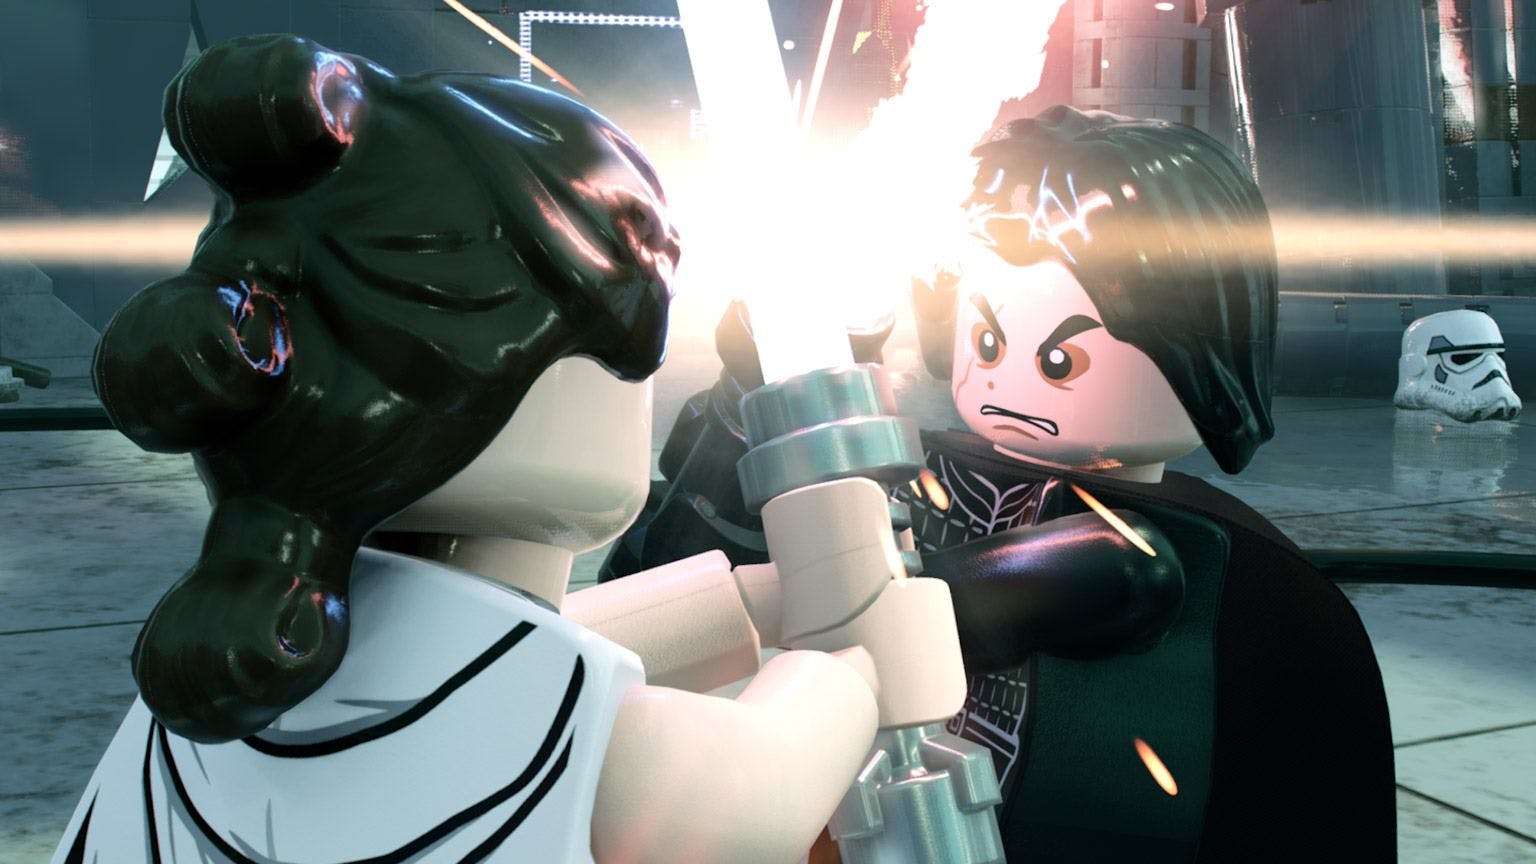 /lego-star-wars-the-skywalker-saga-receives-delay-from-tt-games-qjh33aq feature image